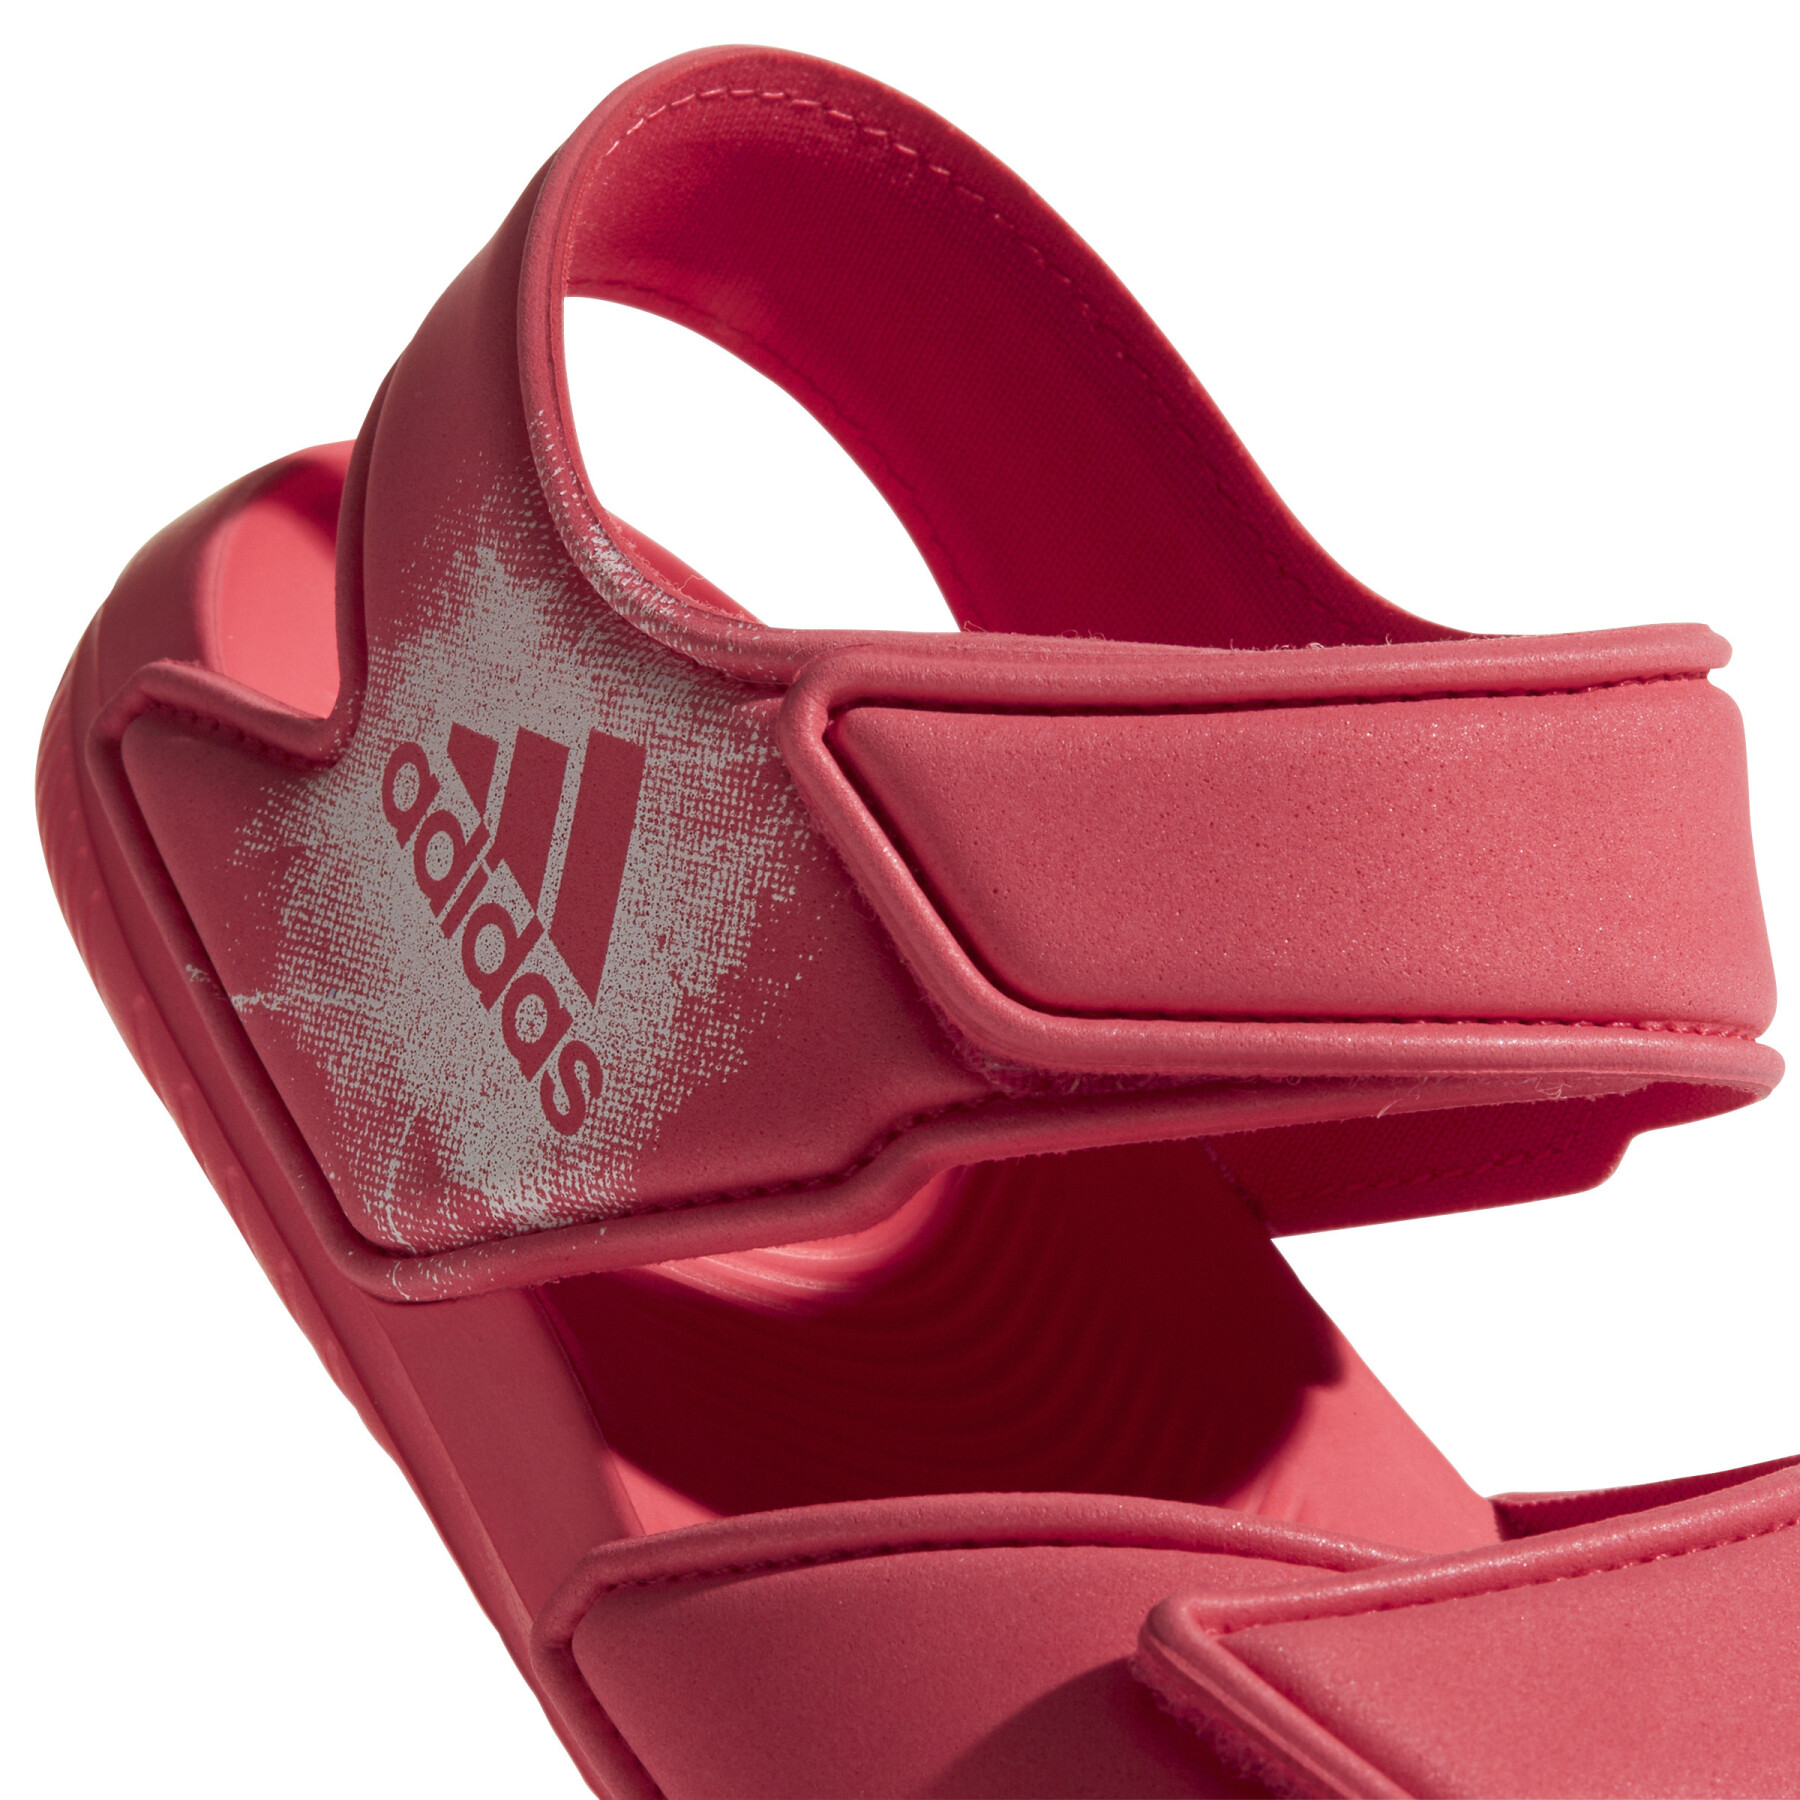 Slides für Kinder adidas AltaSwim